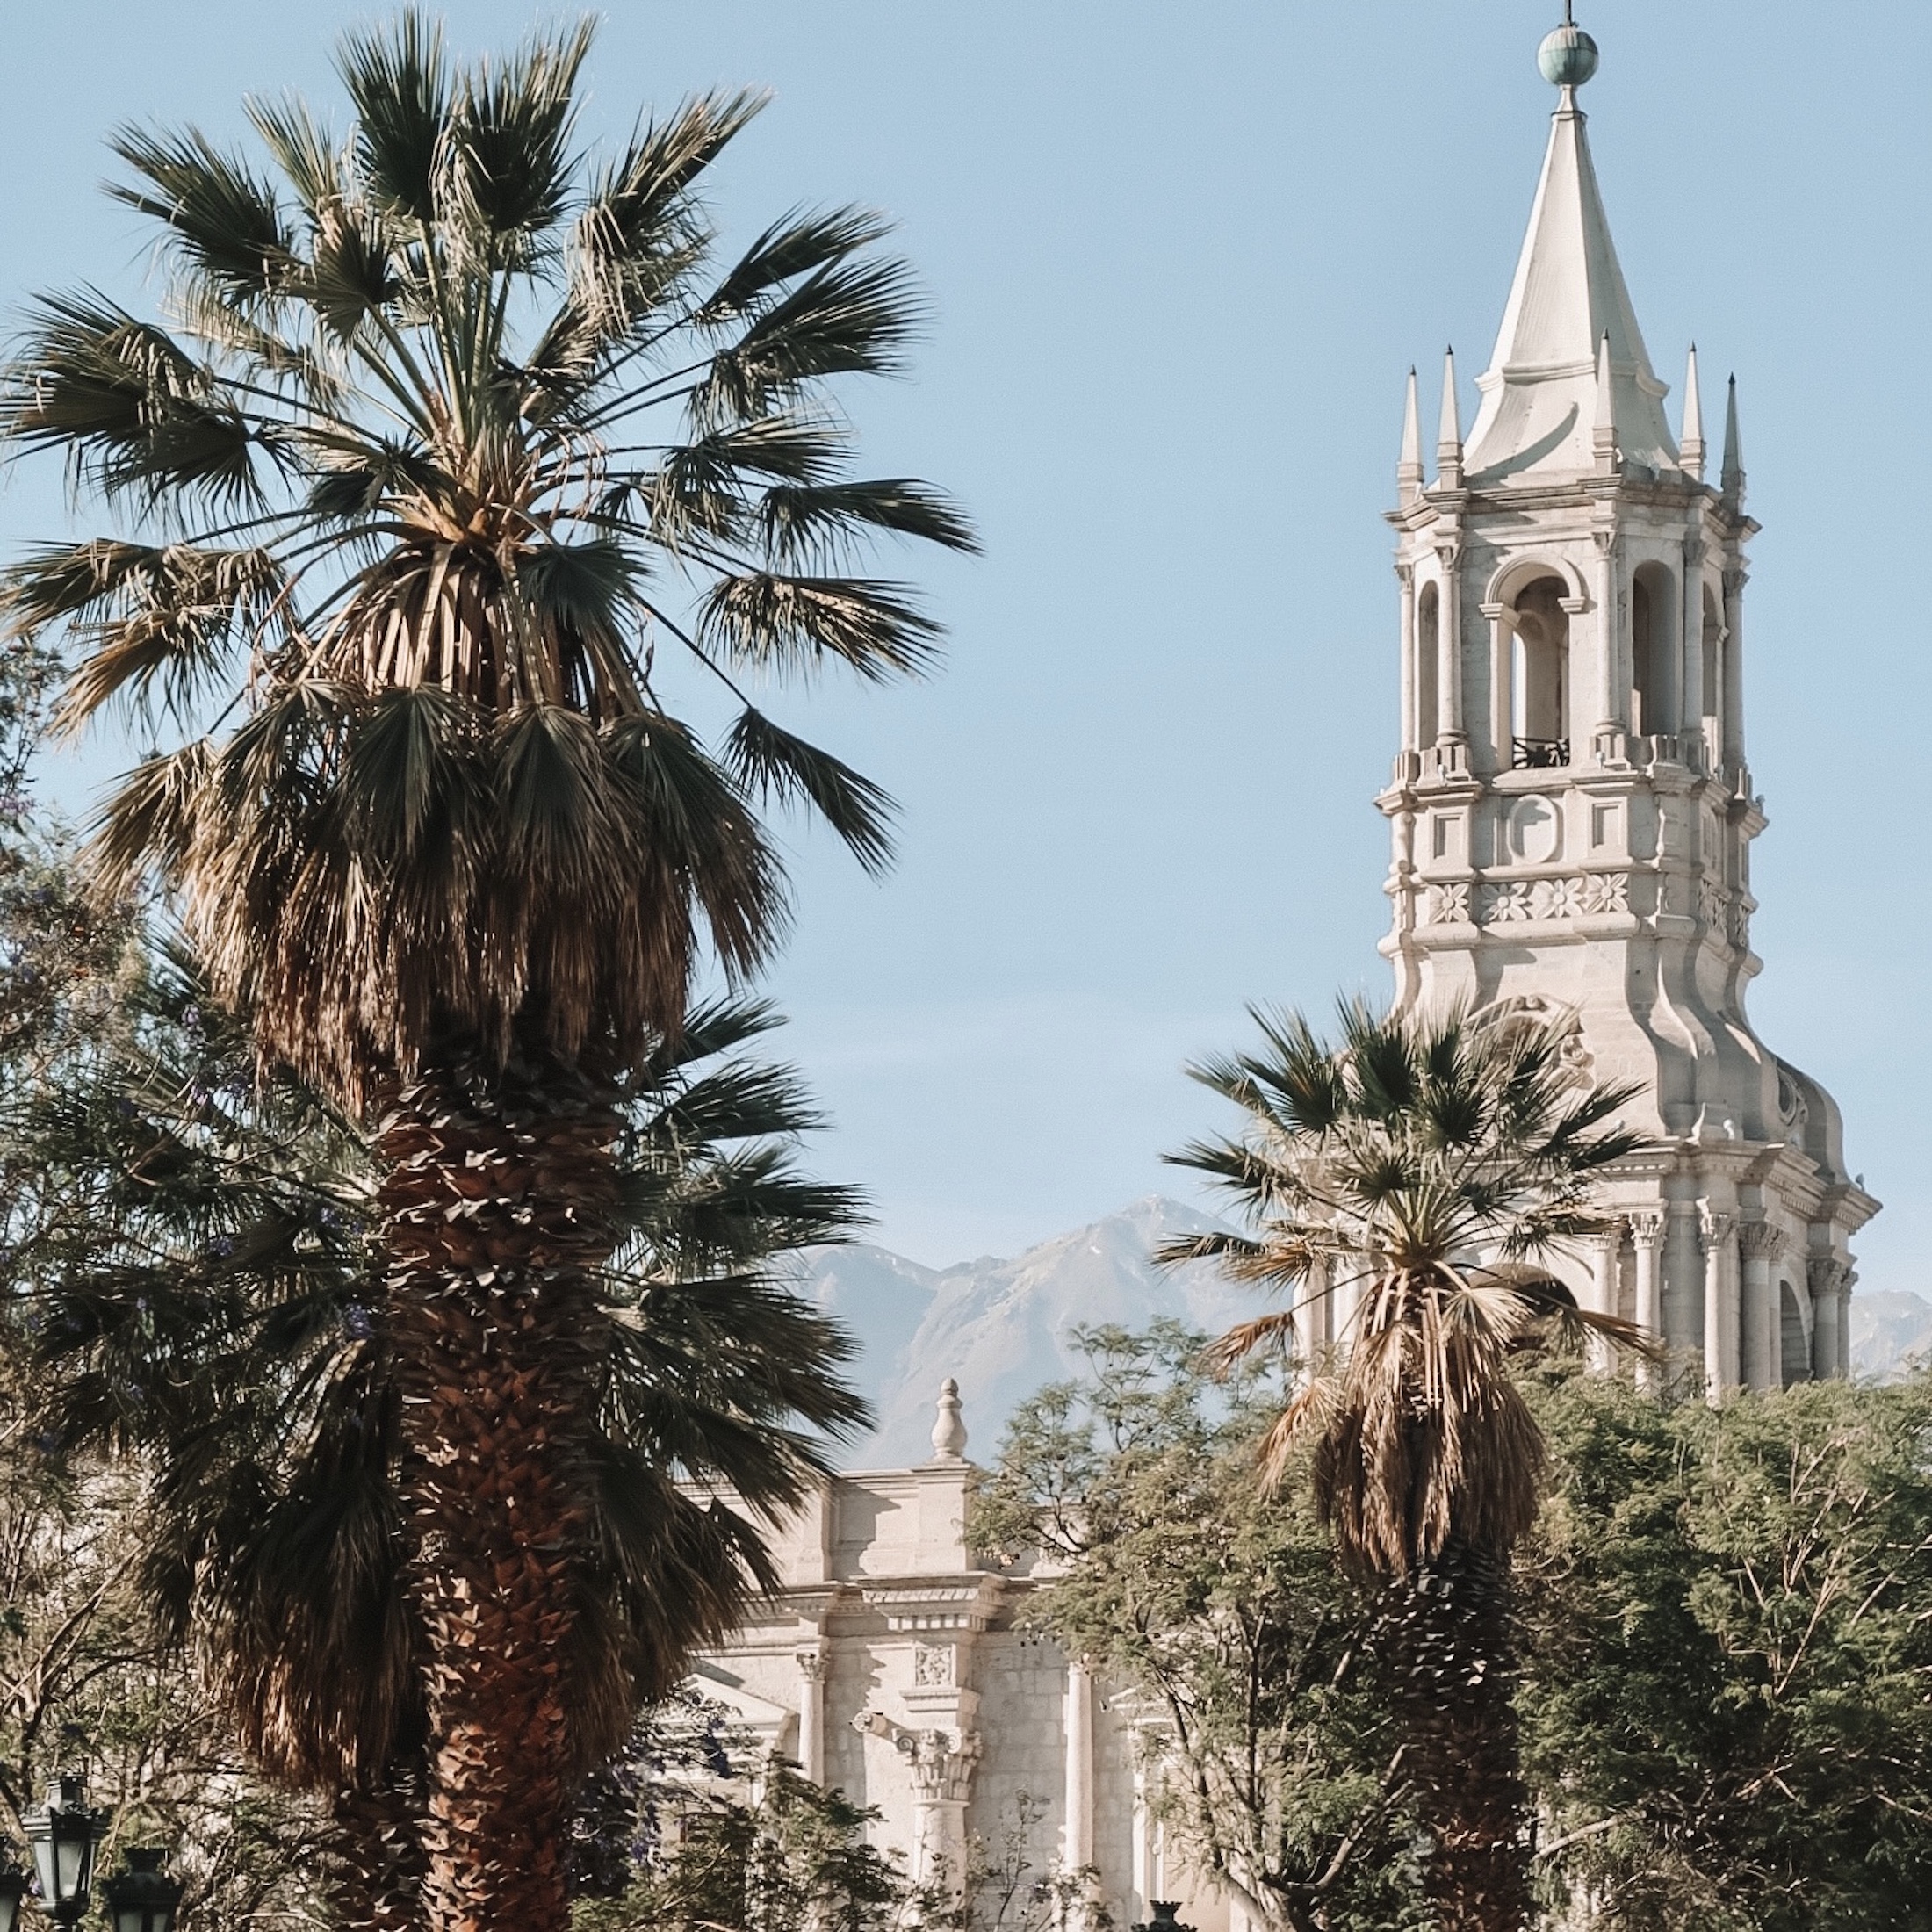 church and palm trees at plaza de armas, arequipa, peru